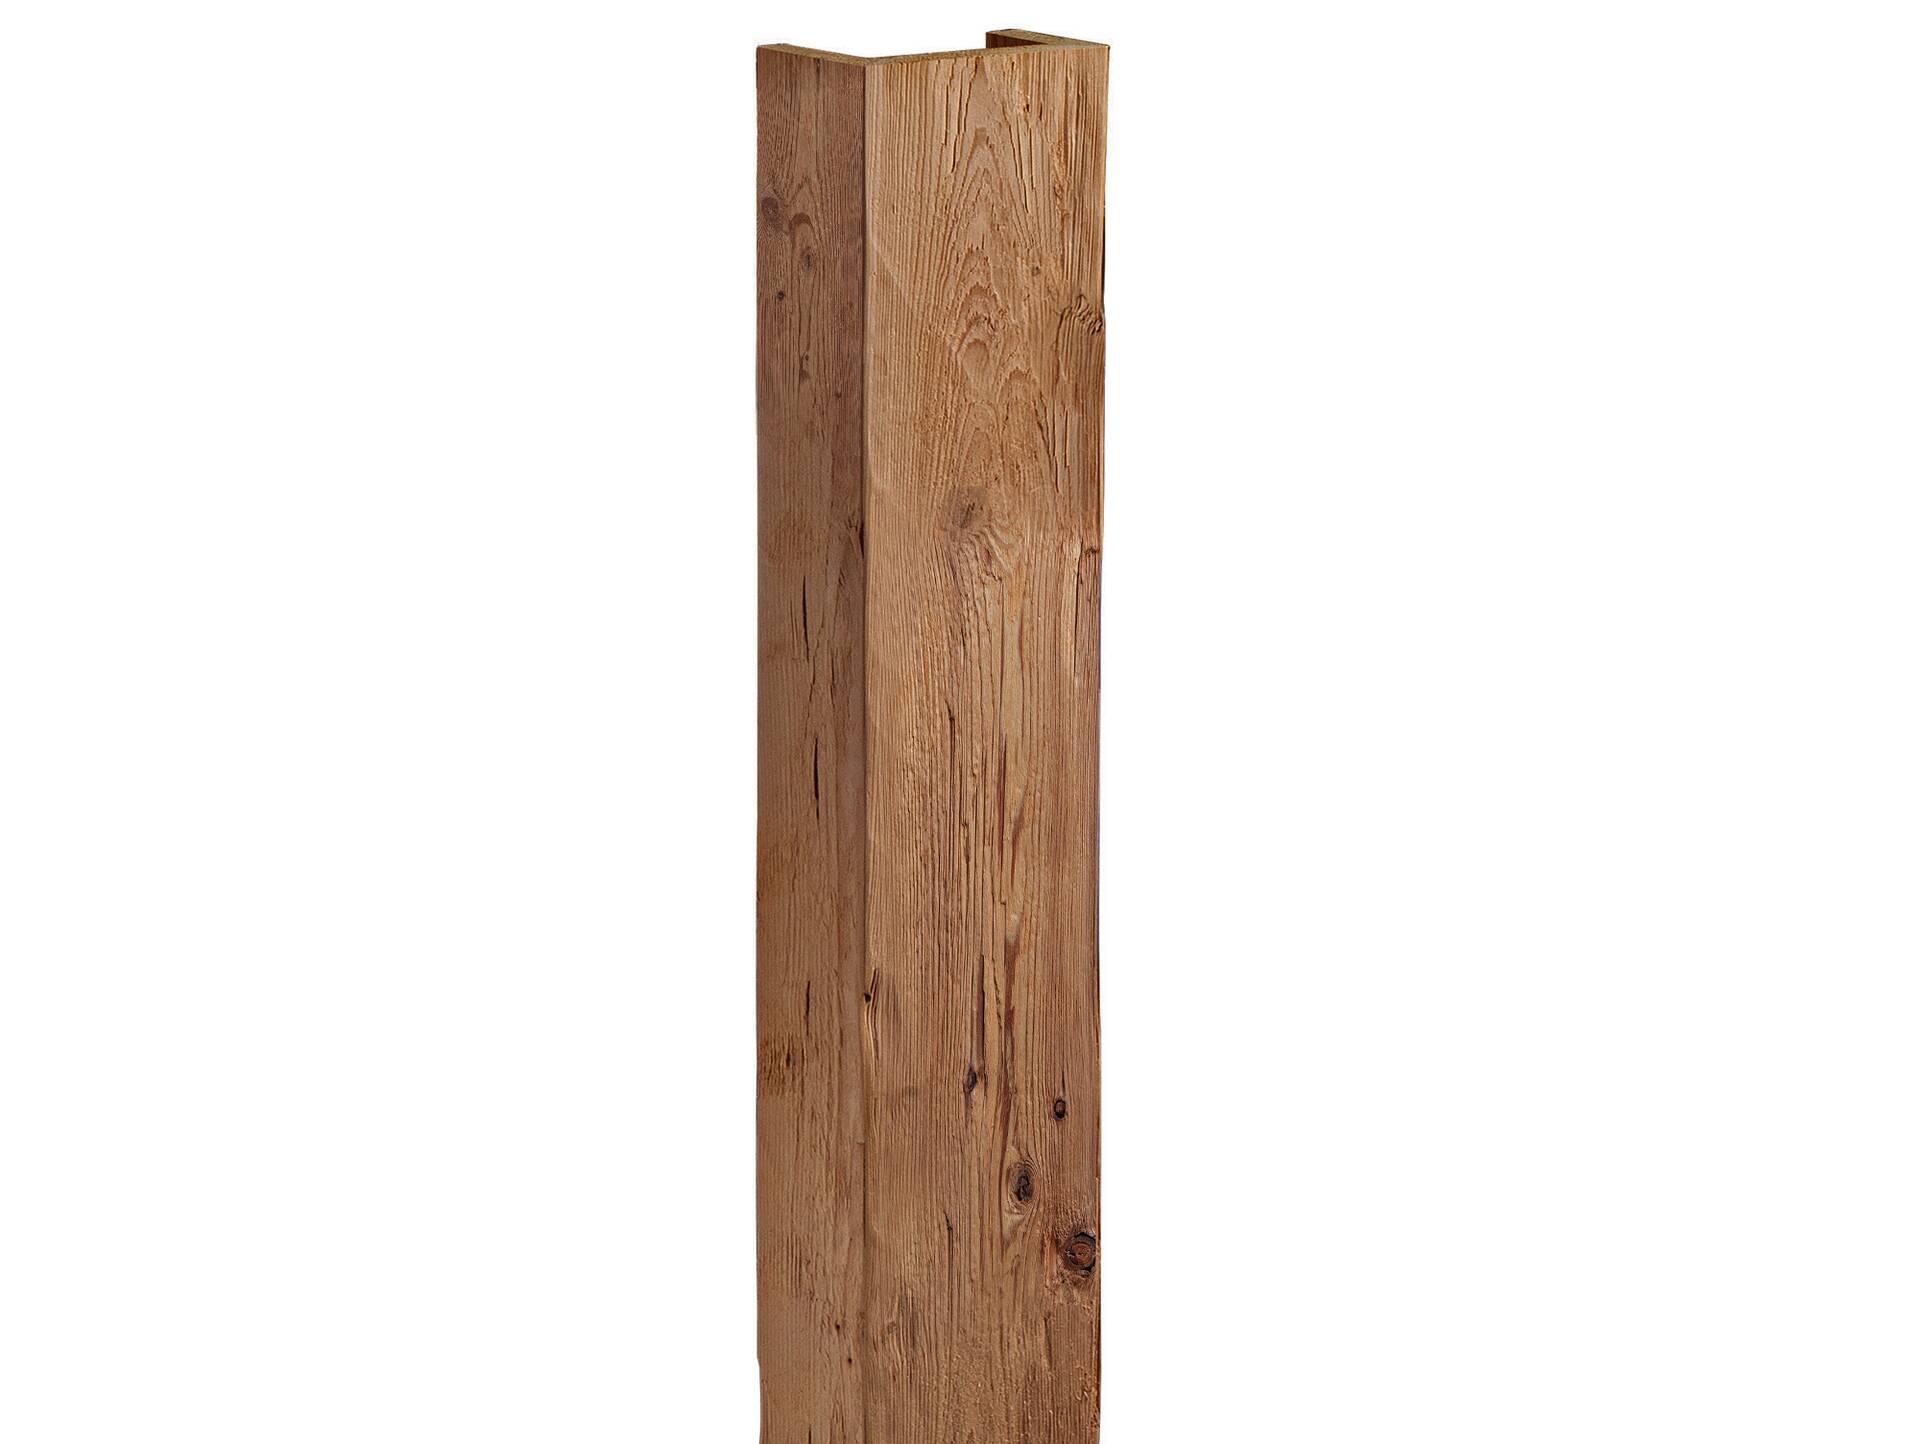 THERMO-U-Balken / Zierbalken gehackt aus THERMO-Lärche, Material Massivholz 120 x 80 mm | 1 Meter